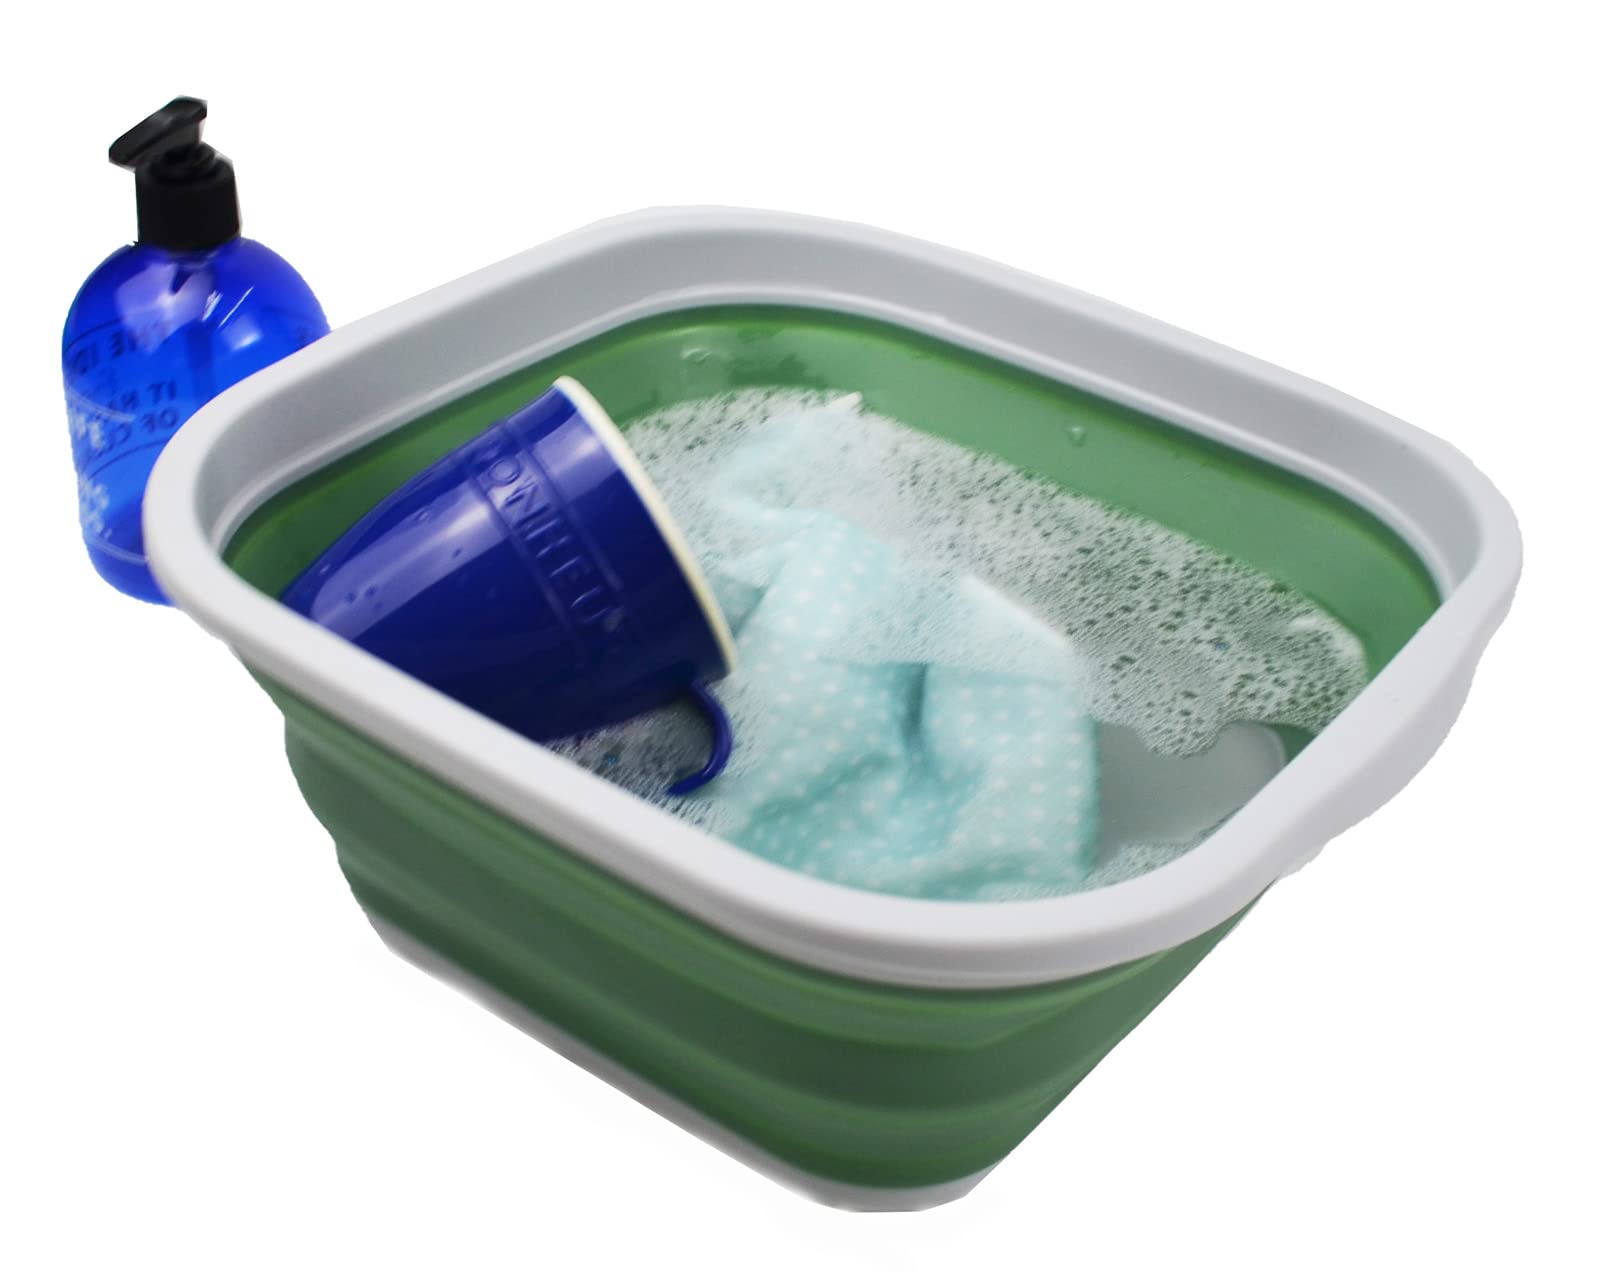 SAMMART 5.5L (1.4 Gallons) Set of 2 Collapsible Tub - Foldable Dish Tub - Portable Washing Basin - Space Saving Plastic Washtub